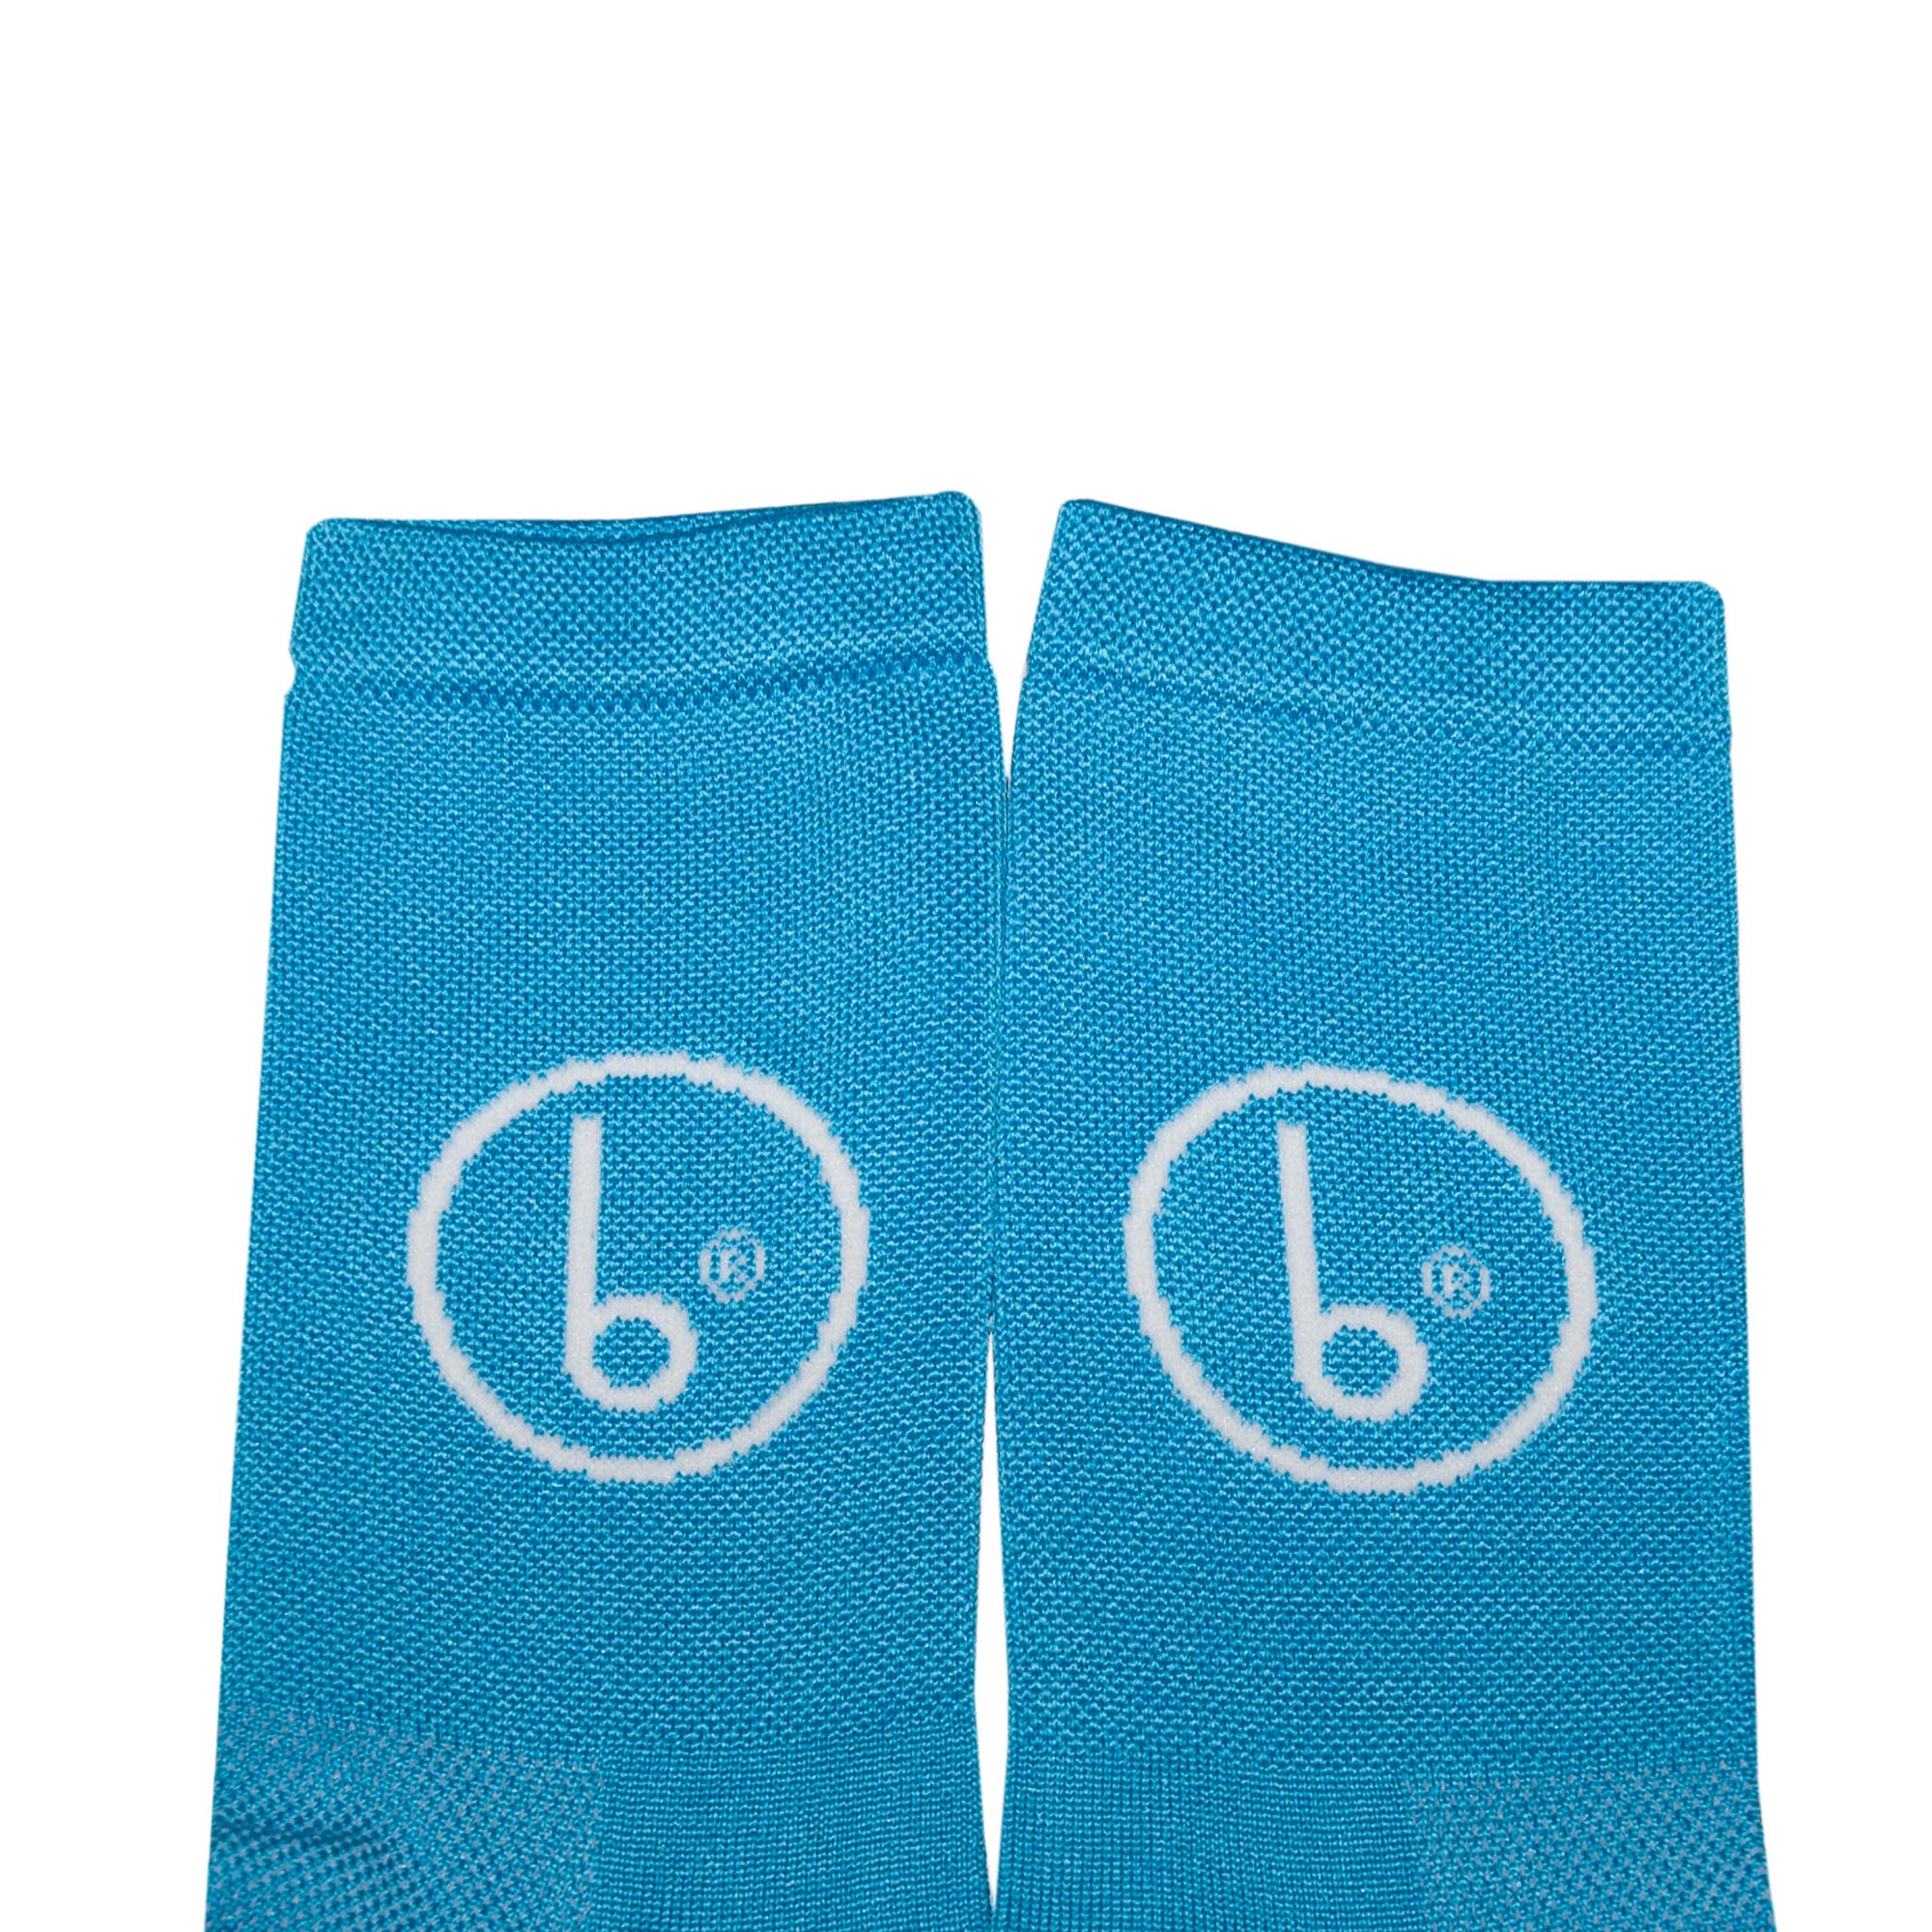 Blue Bee Socks